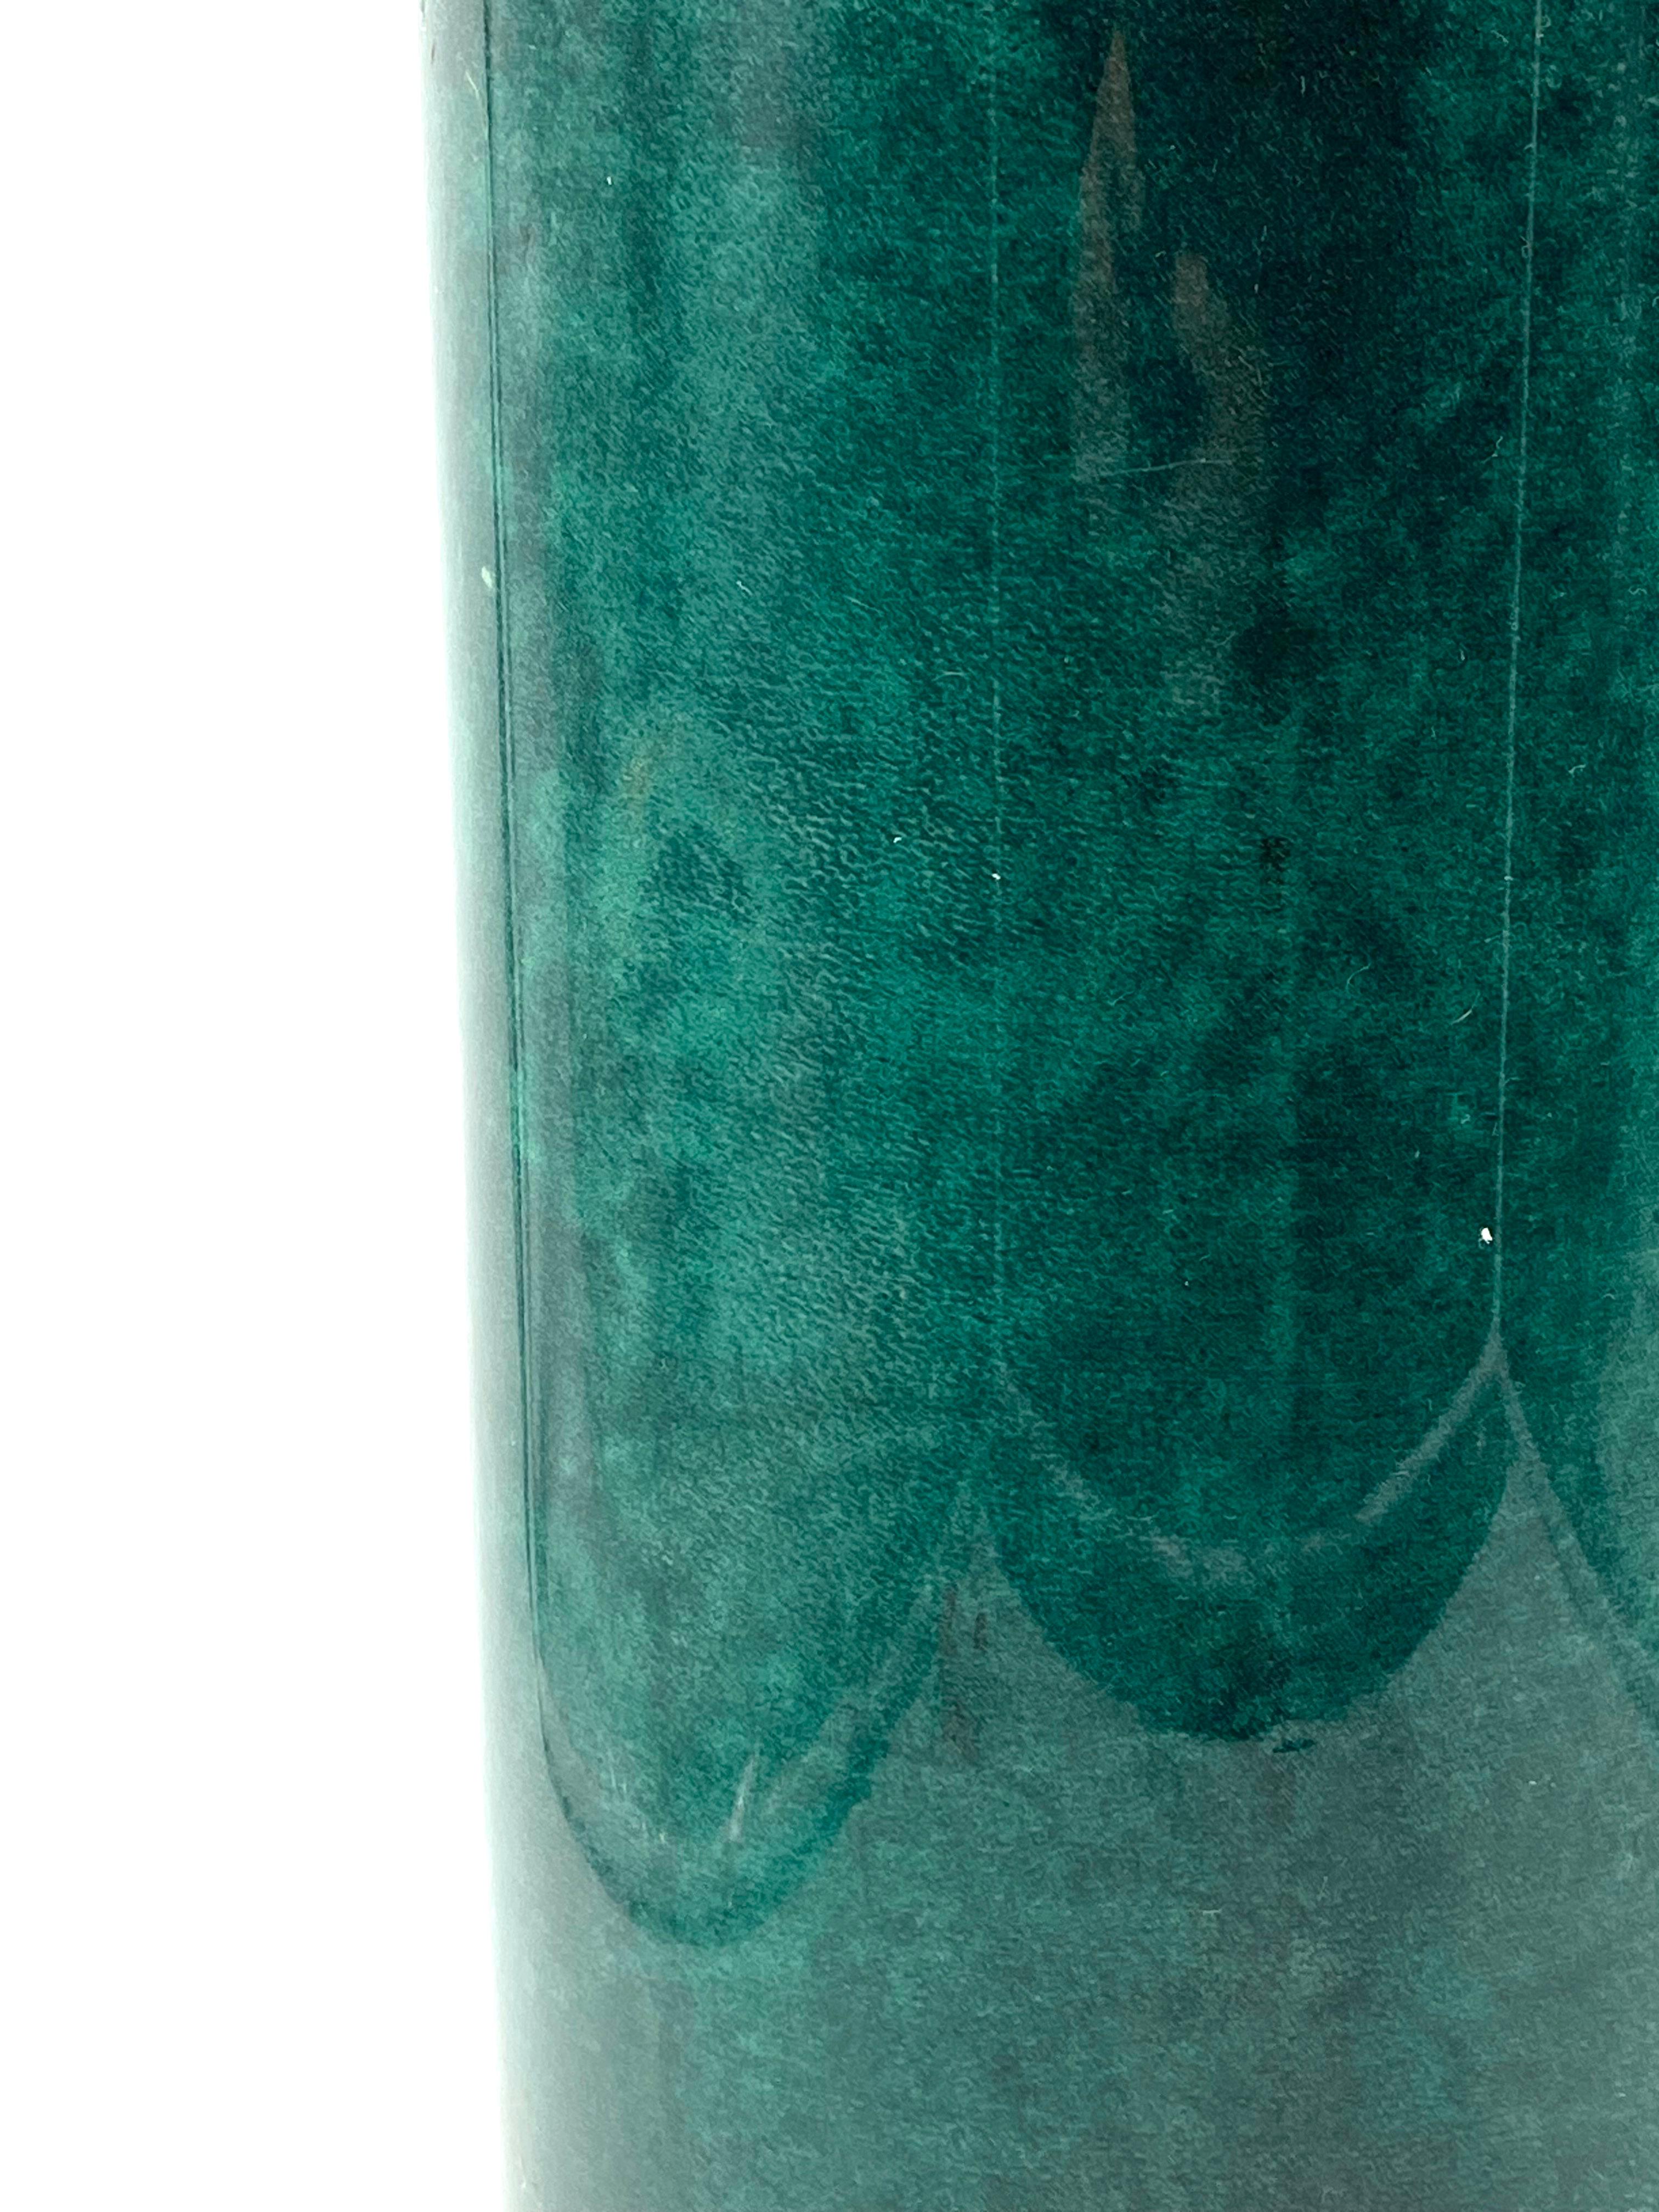 Aldo Tura, green goatskin parchment large floor ashtray, Italy 1960s 1